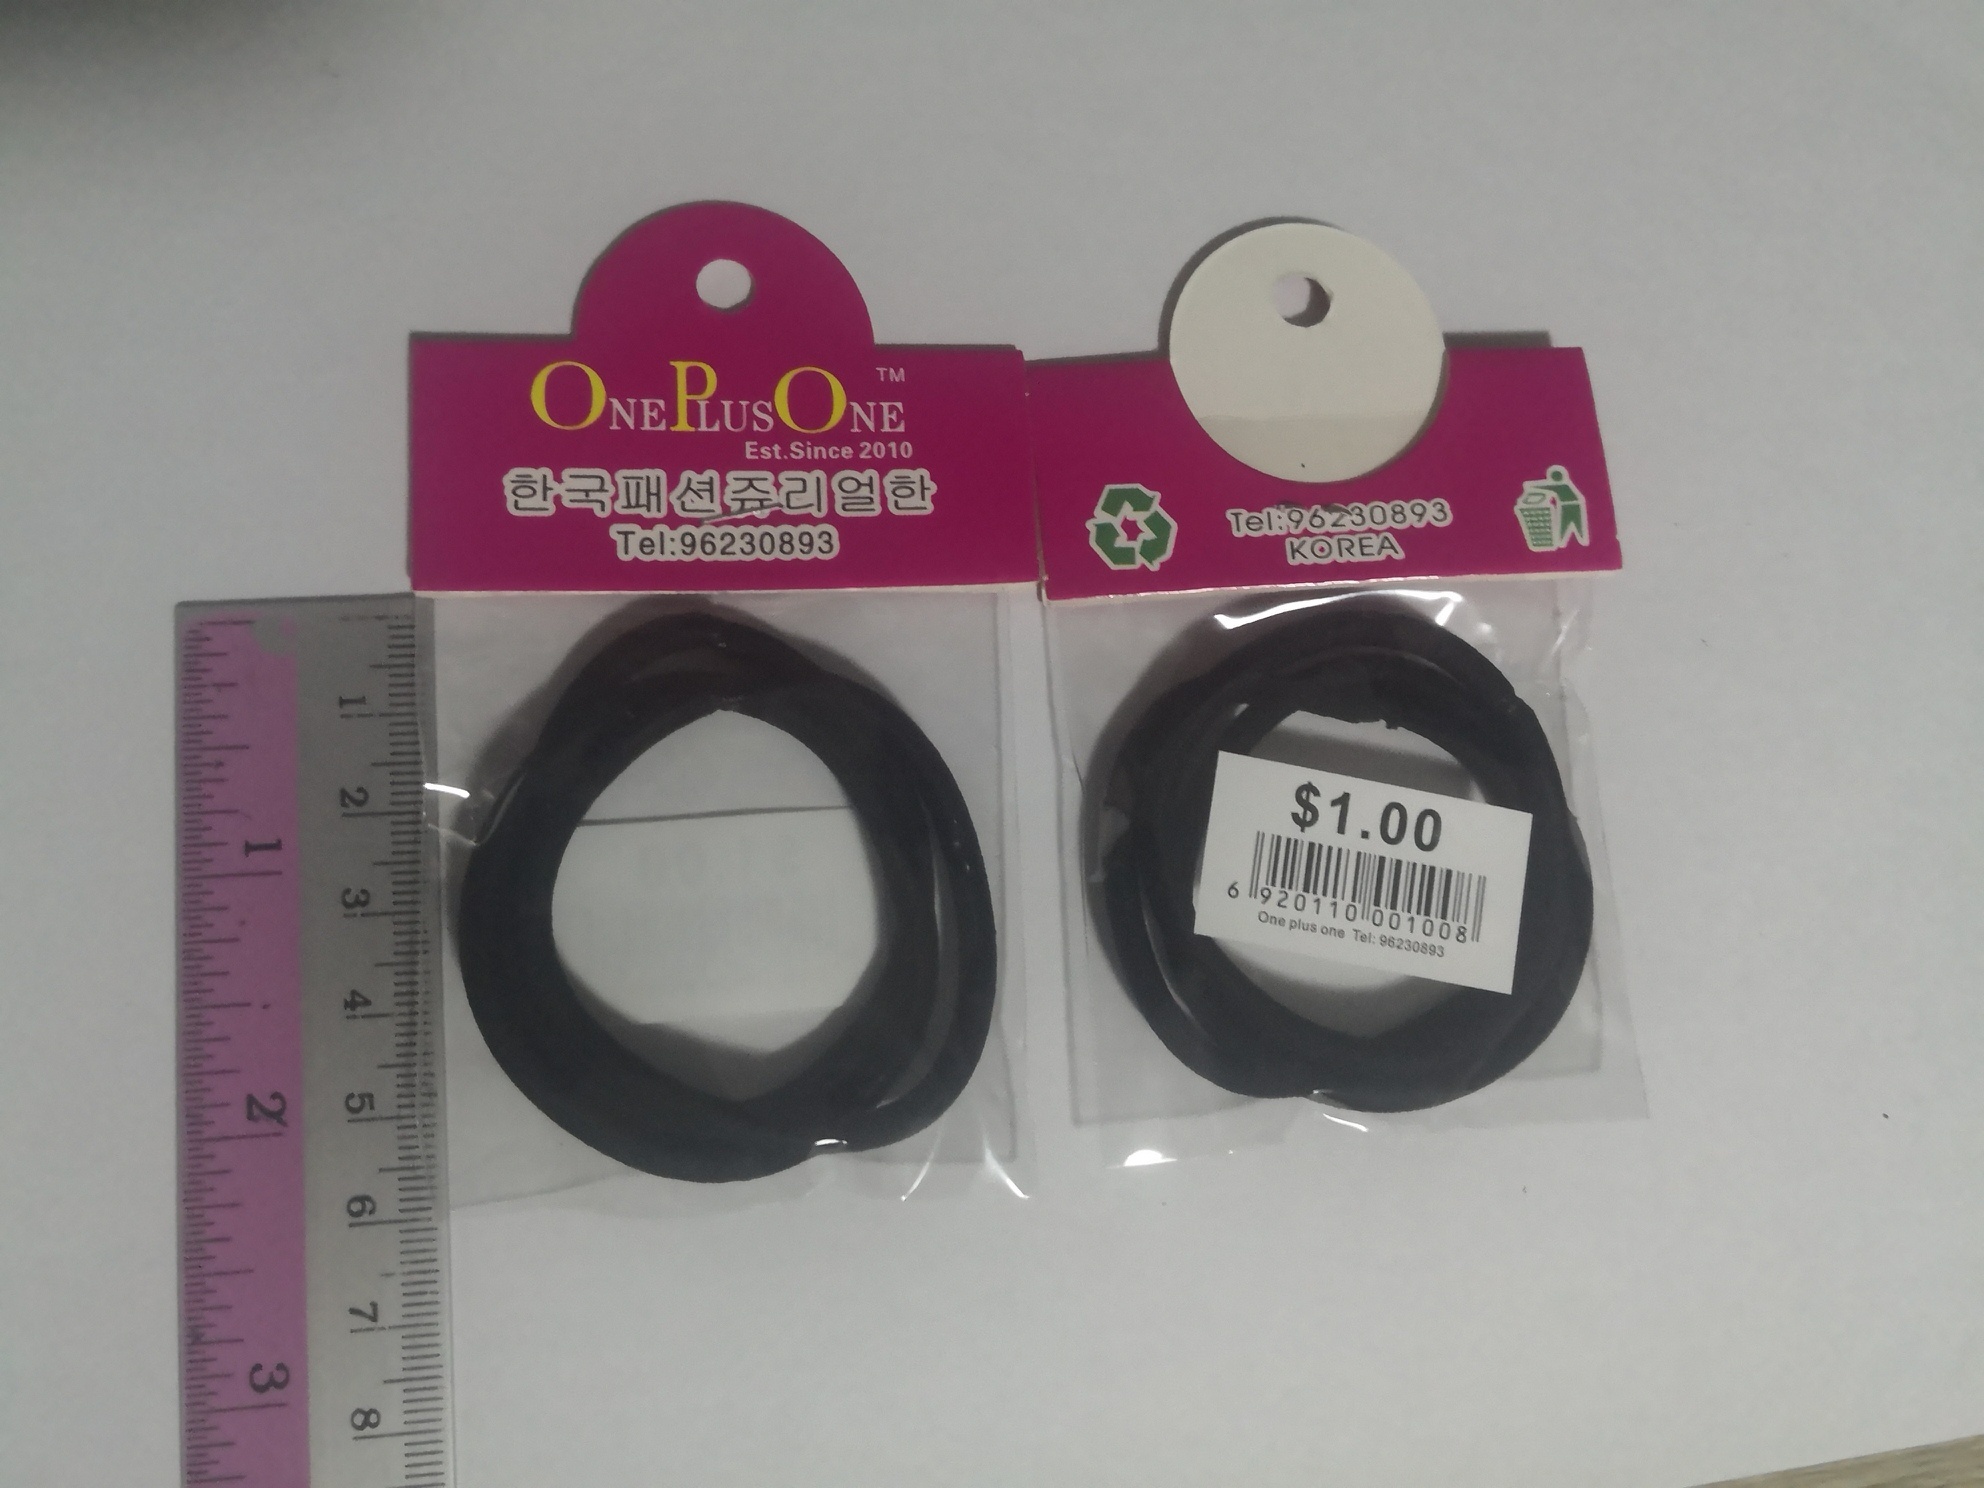 black rubber bands for sale